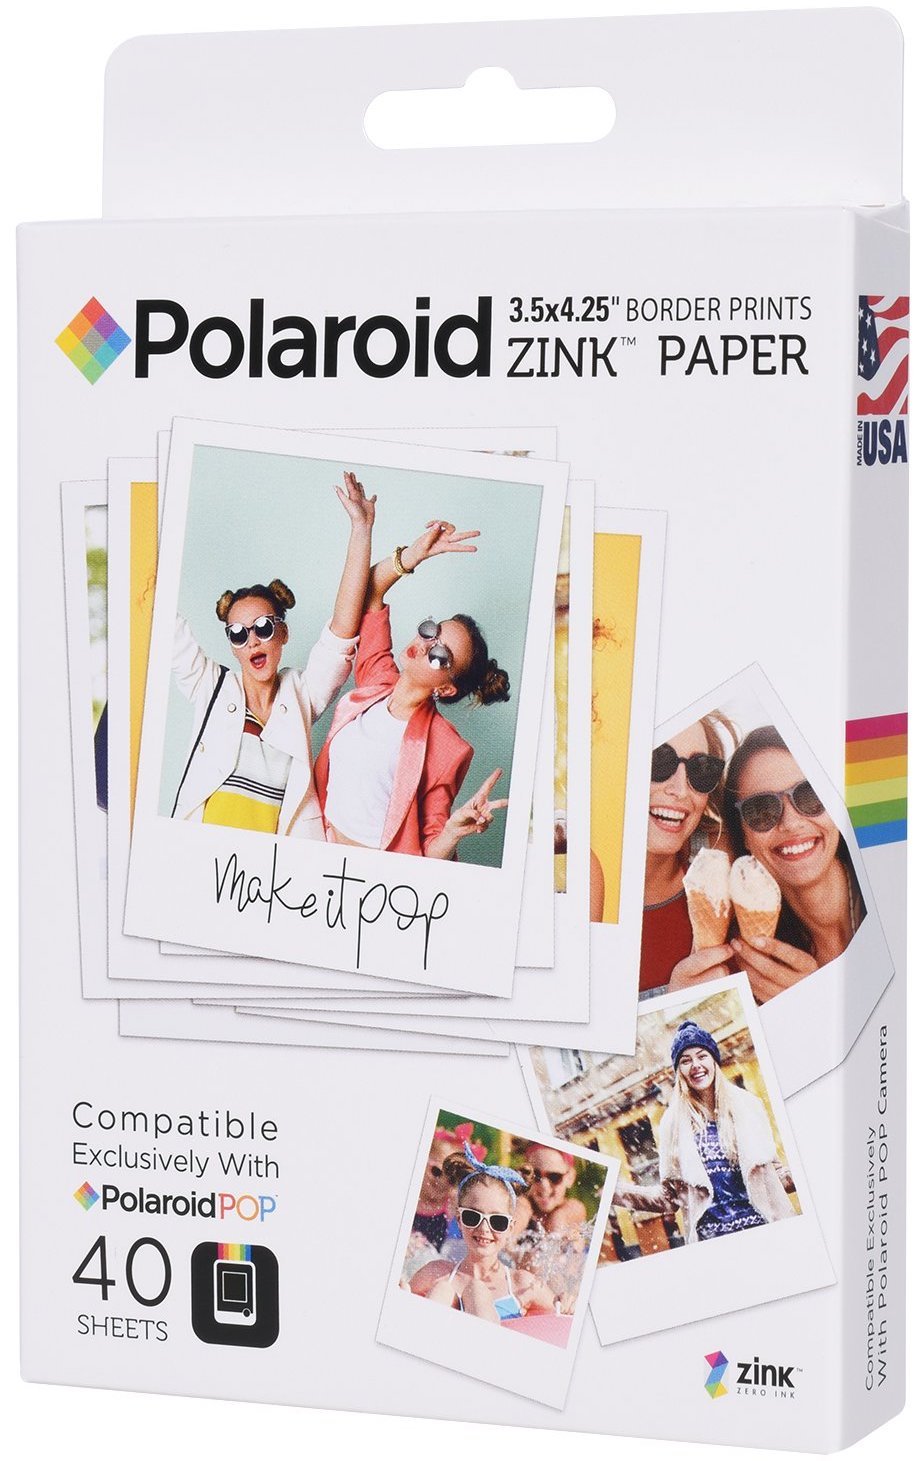 Polaroid Pop ZINK paper